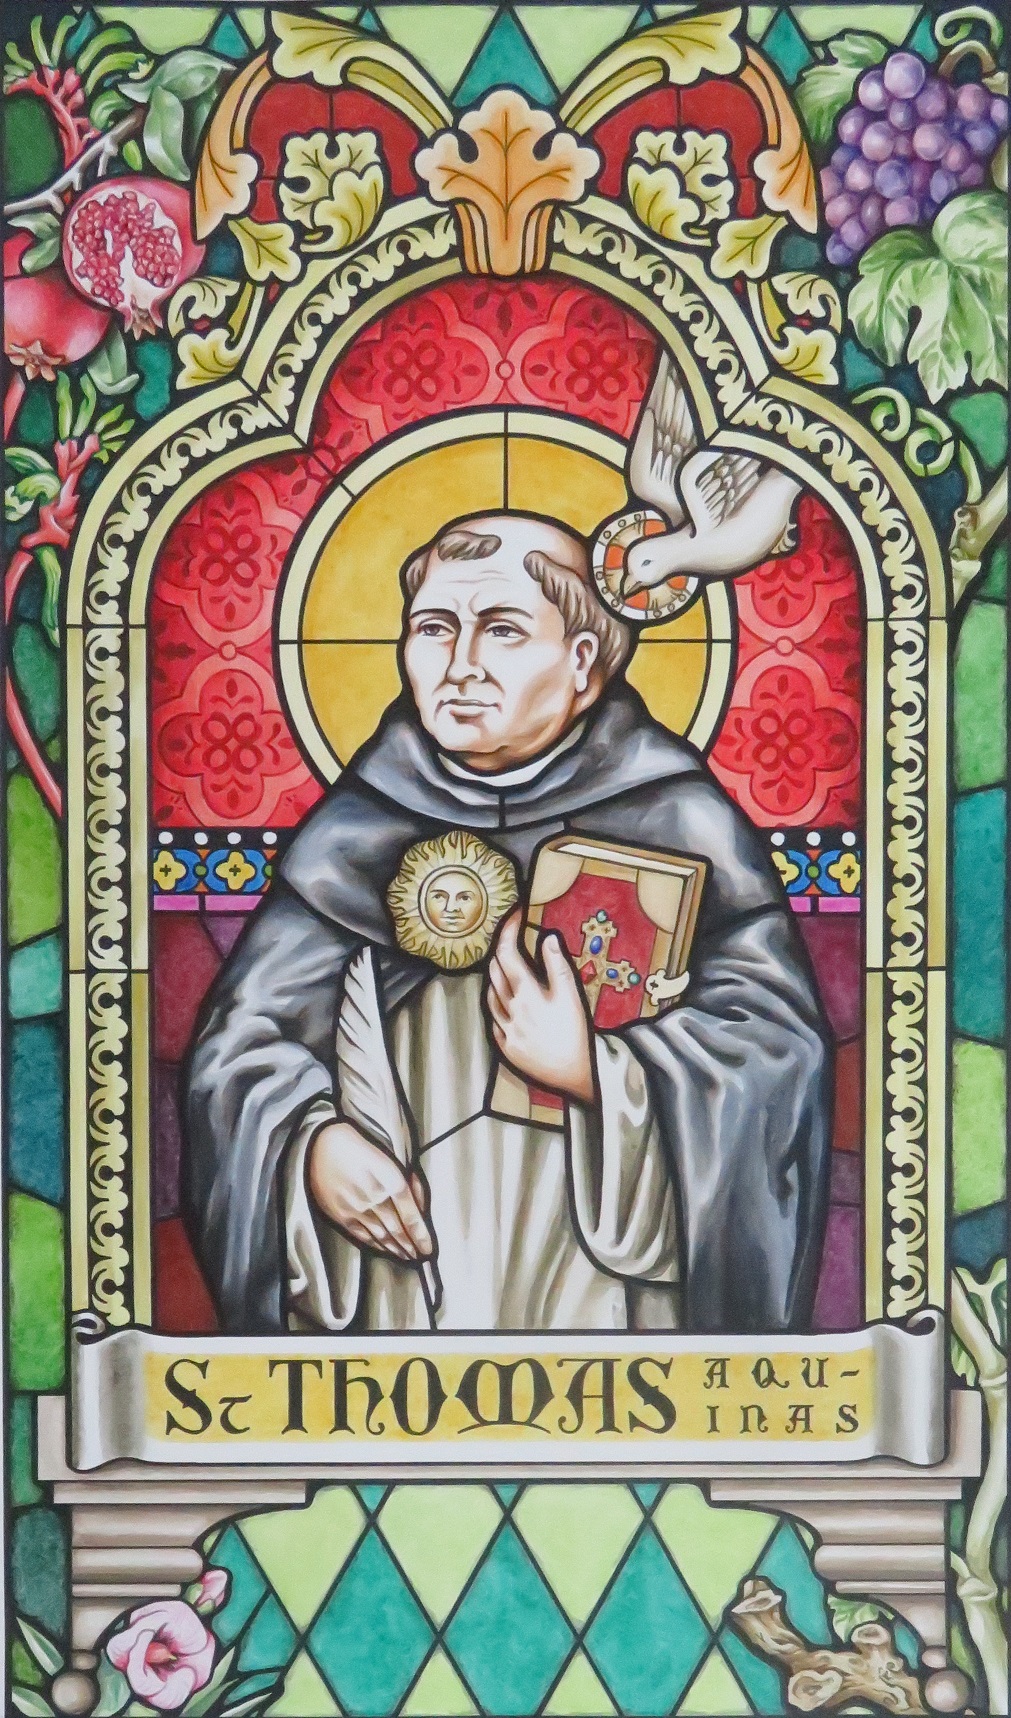 St Thomas Aquinas lo res